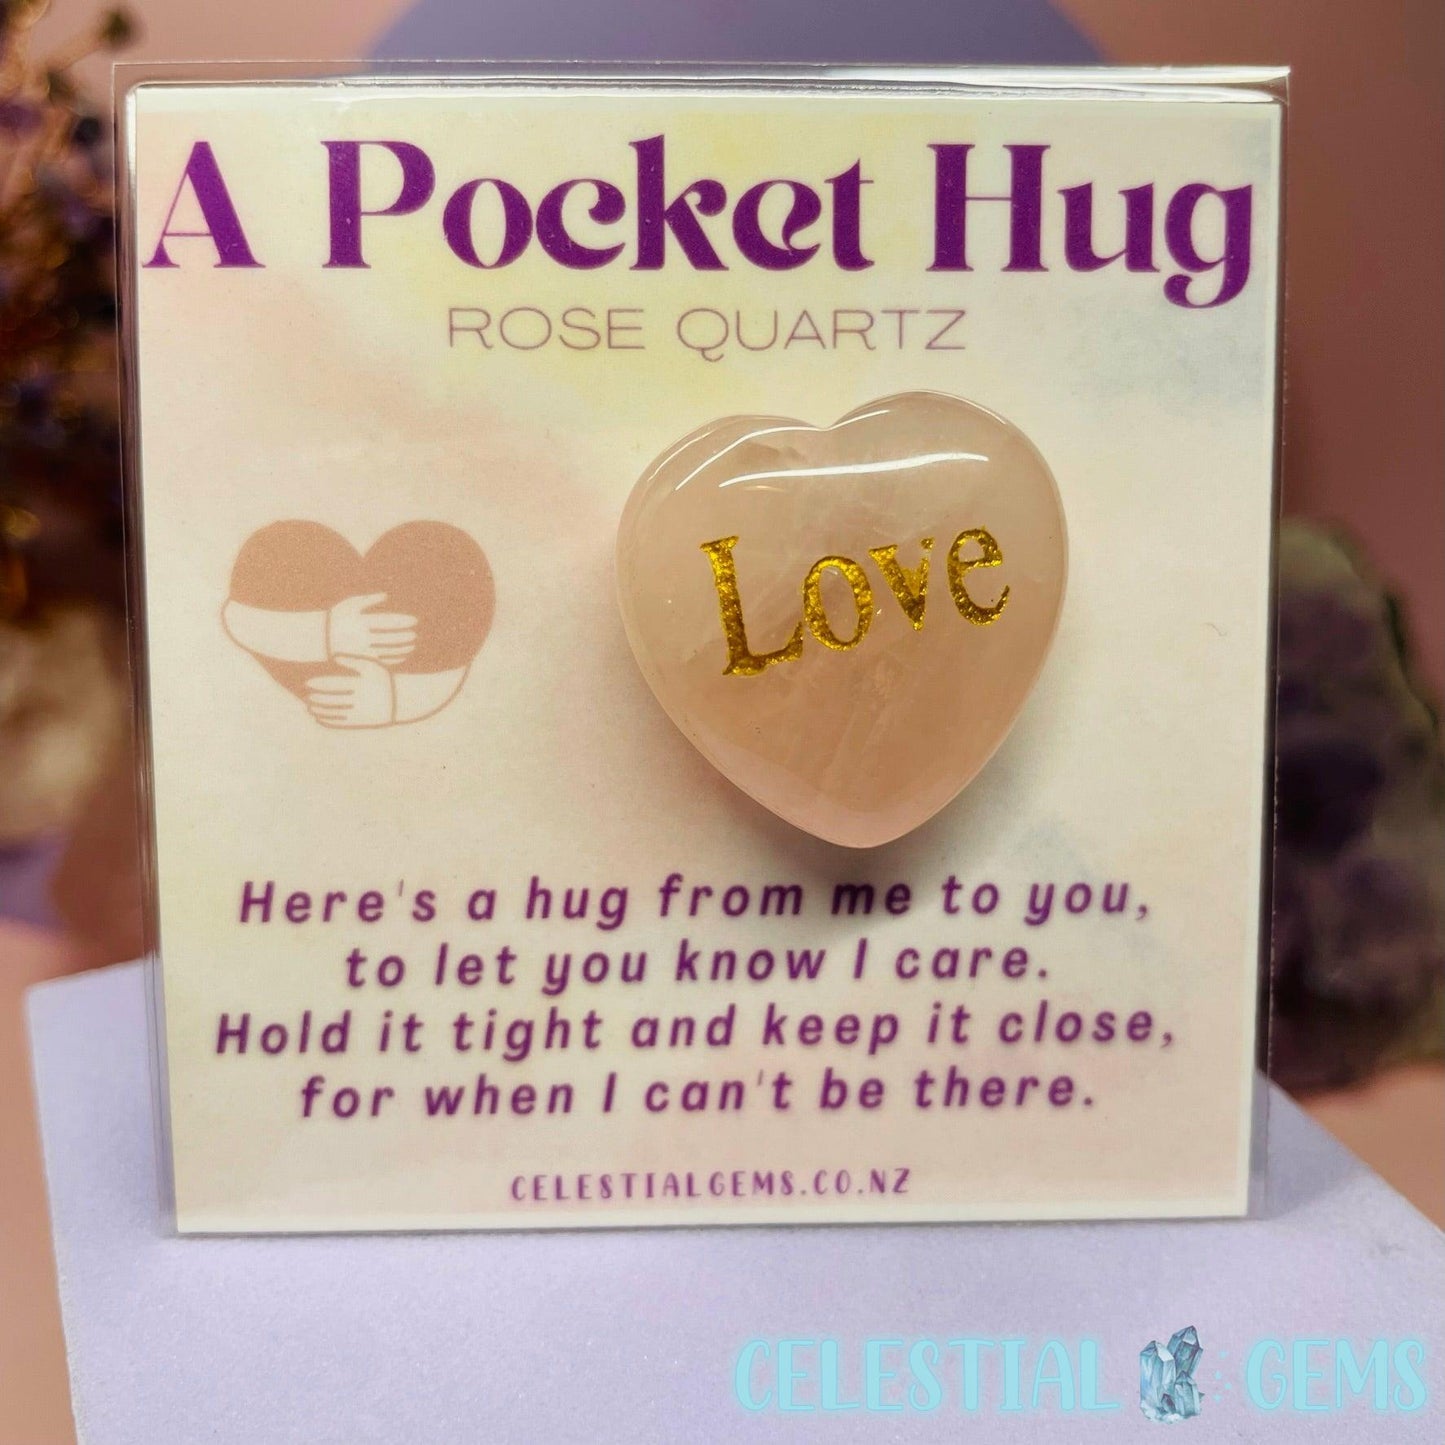 A Pocket Hug - Rose Quartz 'Love' Heart